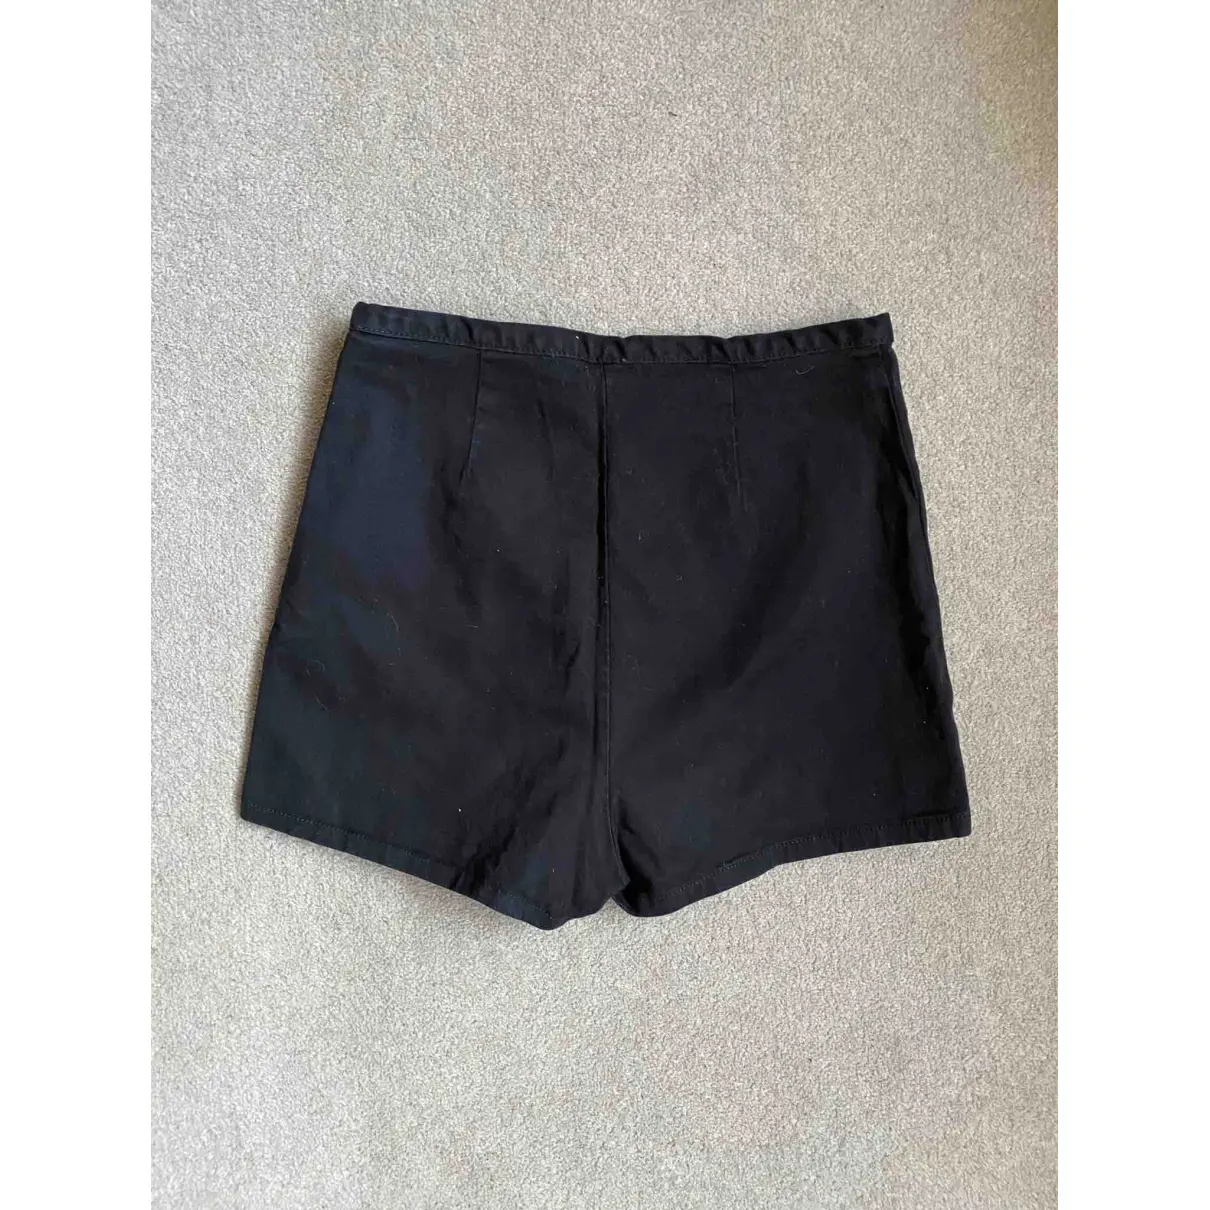 Buy American Apparel Black Cotton Shorts online